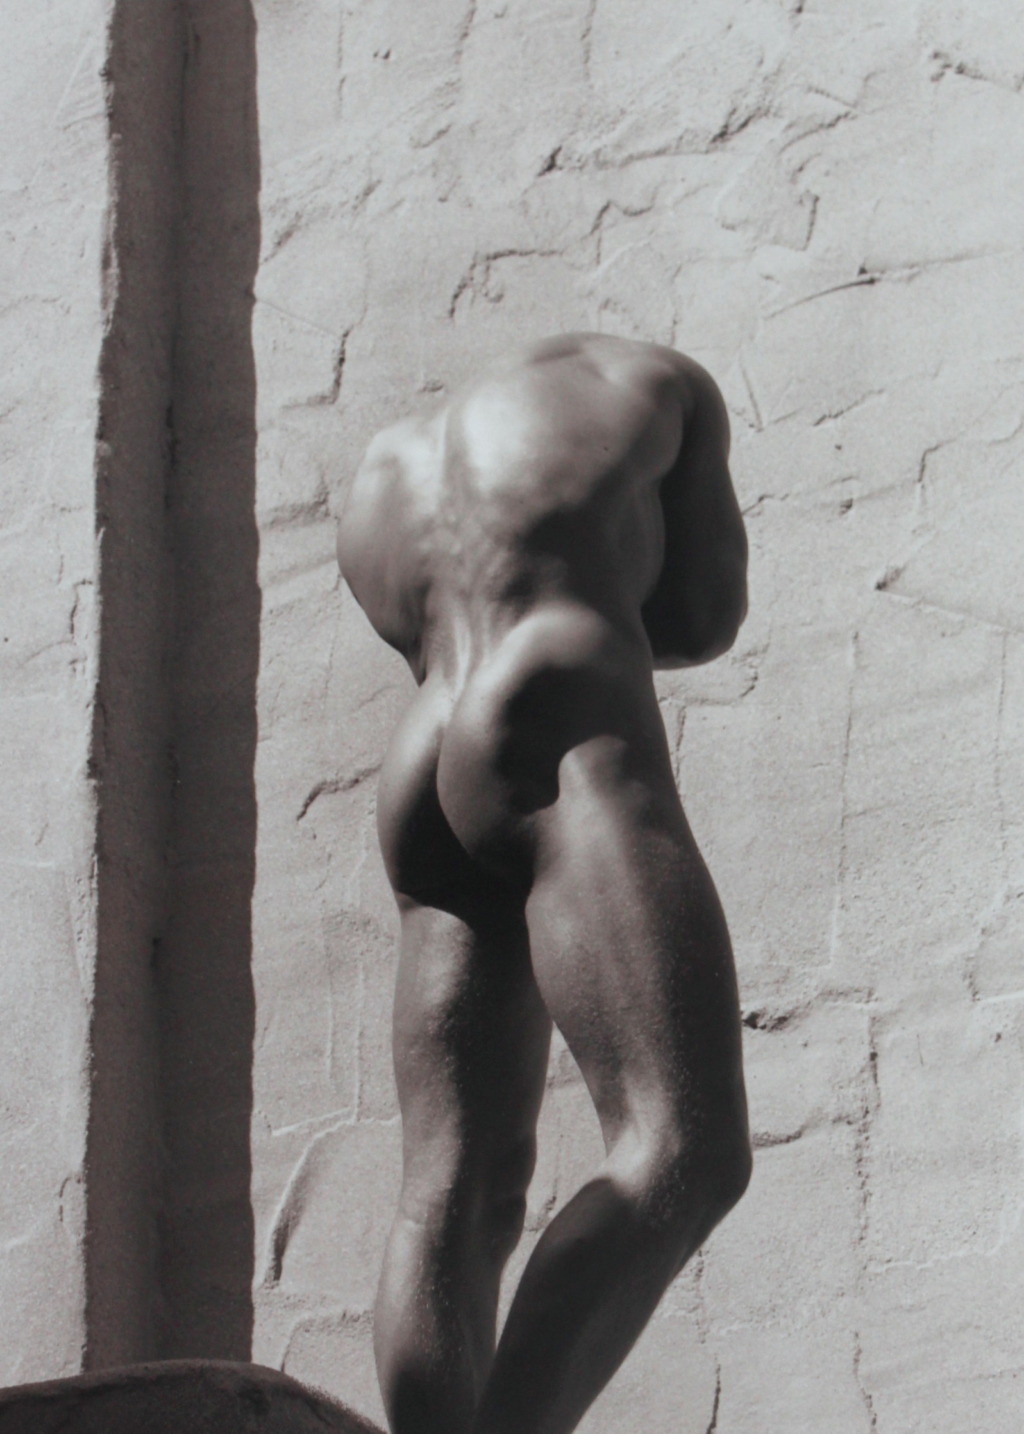 Herb Ritts (USA, 1952 - 2002)
Headless Nude, Silverlake 1984“
18.5 x 12.5 cm / 7.4 x 4.9 in
Gelatin silver print
Edition 6/25
